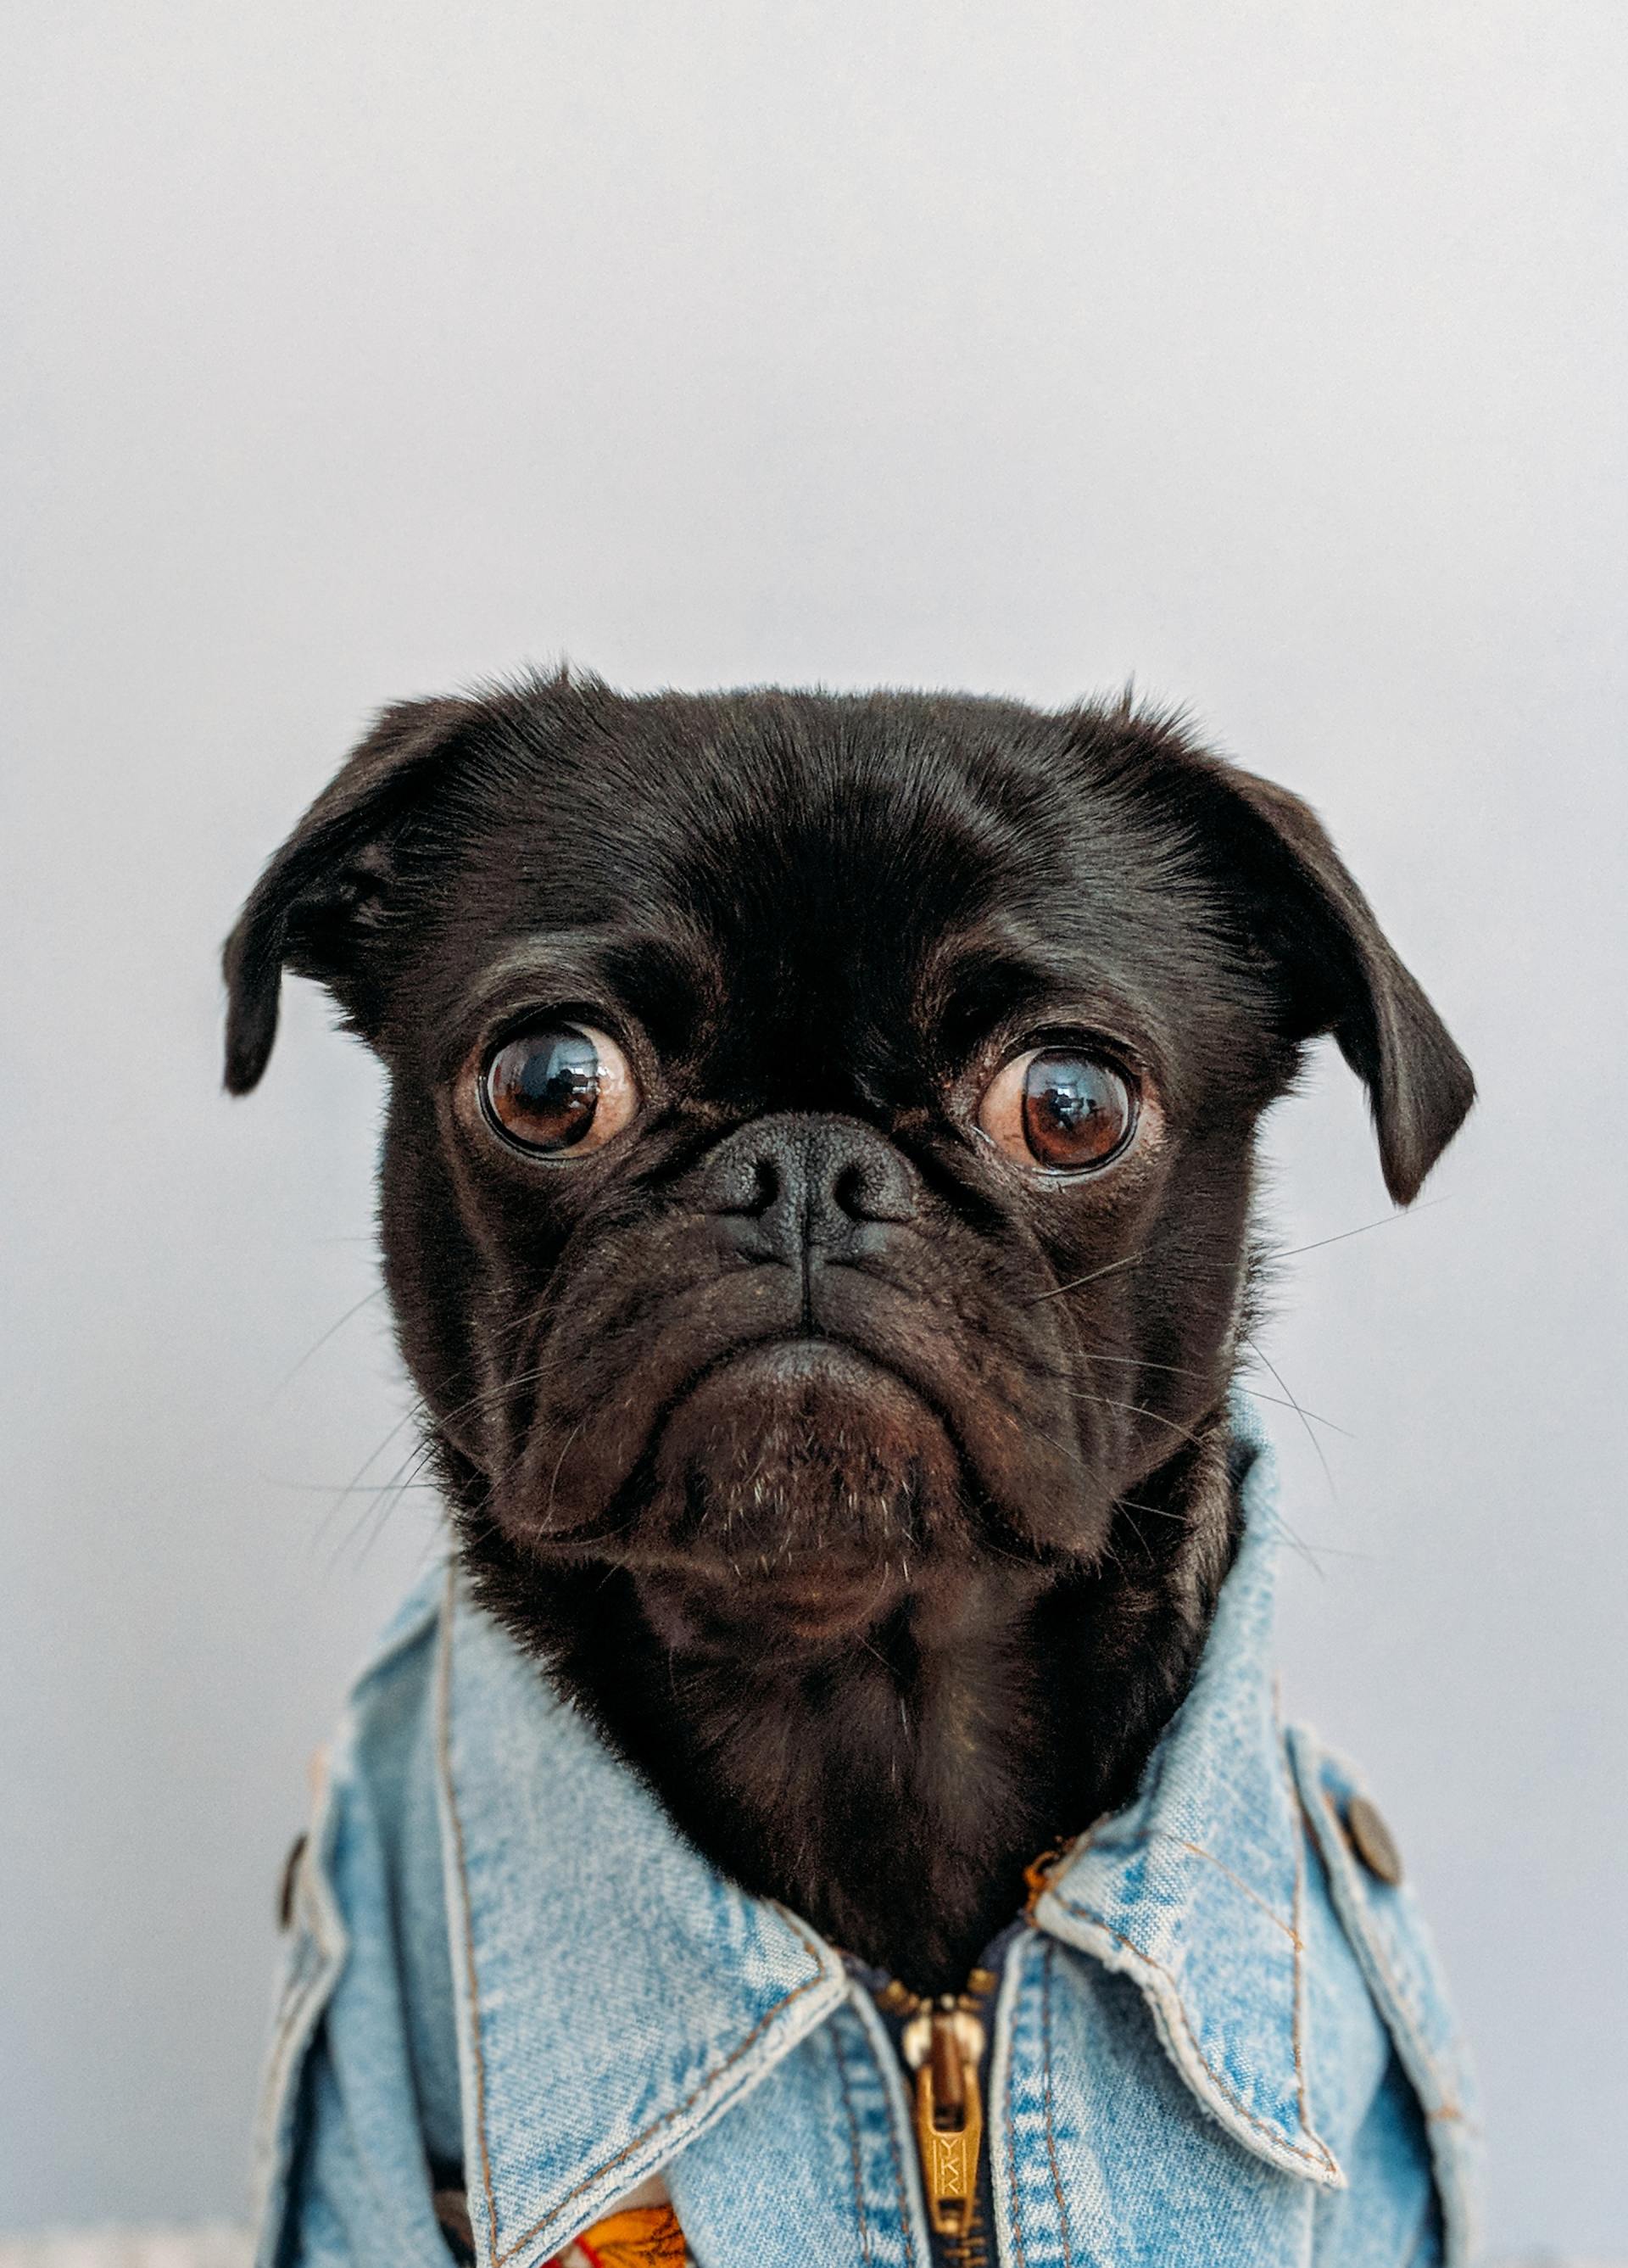 A pug in a blue collared shirt